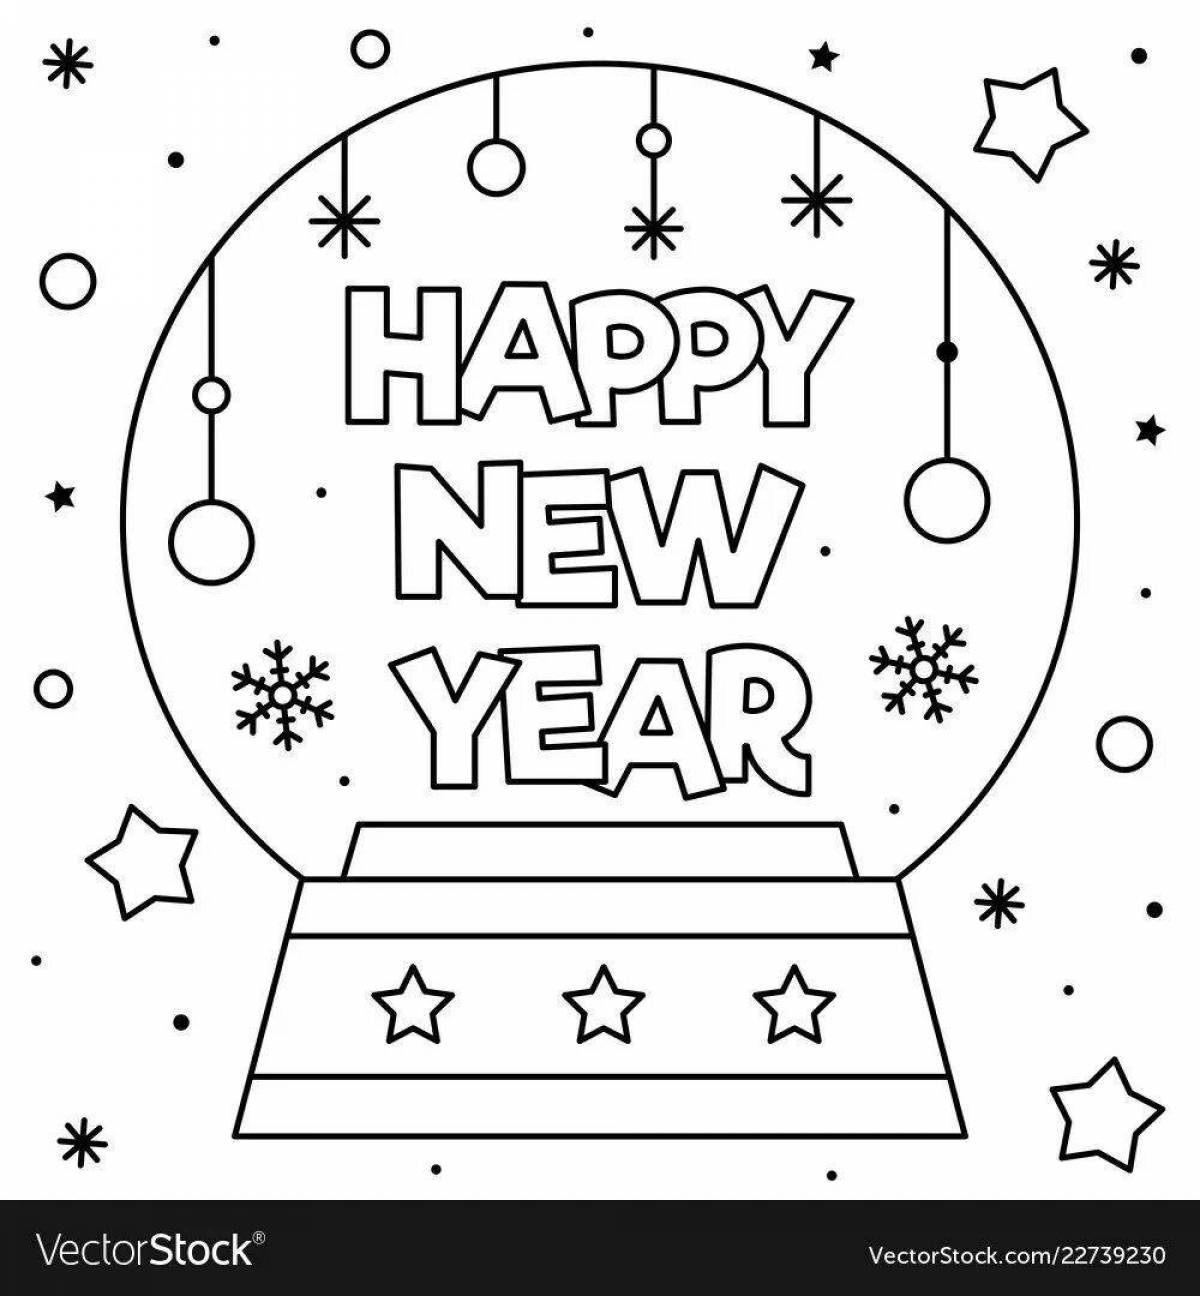 Vivacious coloring page с новым годом надпись